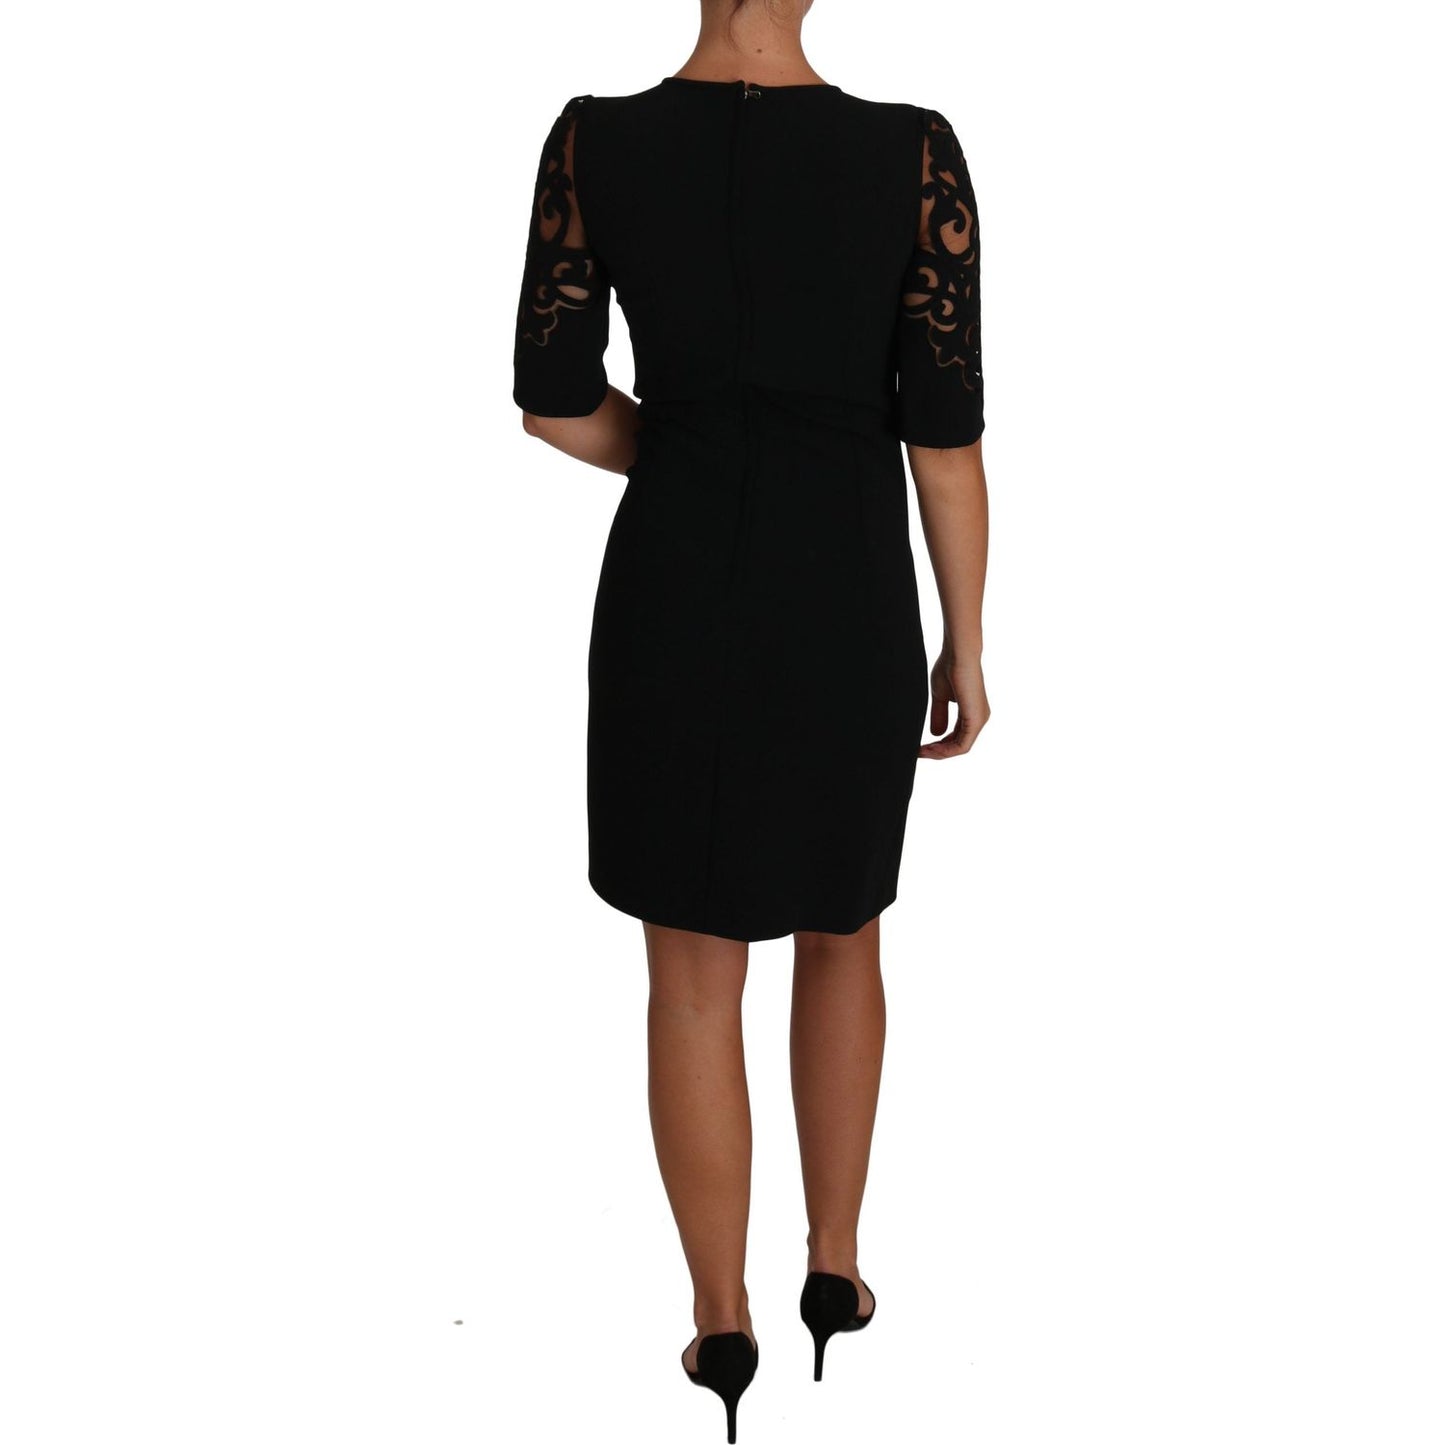 Dolce & Gabbana Elegant Black Cut-Out Detail Dress black-floral-cut-out-pattern-coctail-dress 637879-black-floral-cut-out-pattern-coctail-dress-1.jpg